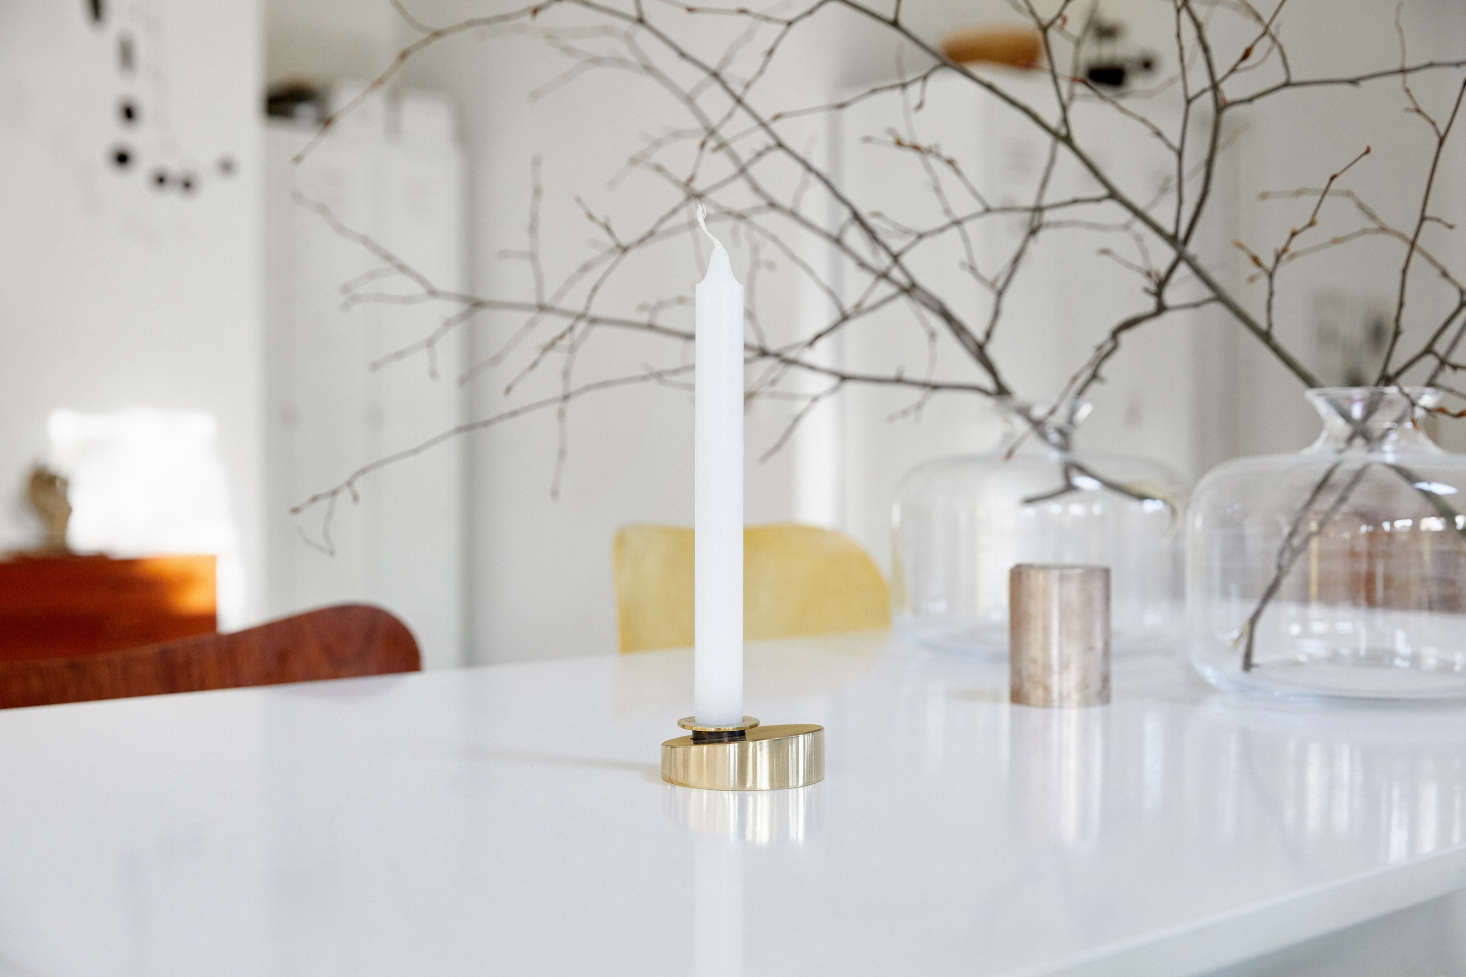 lappalainen brass candlestick. marc krause photo. 3